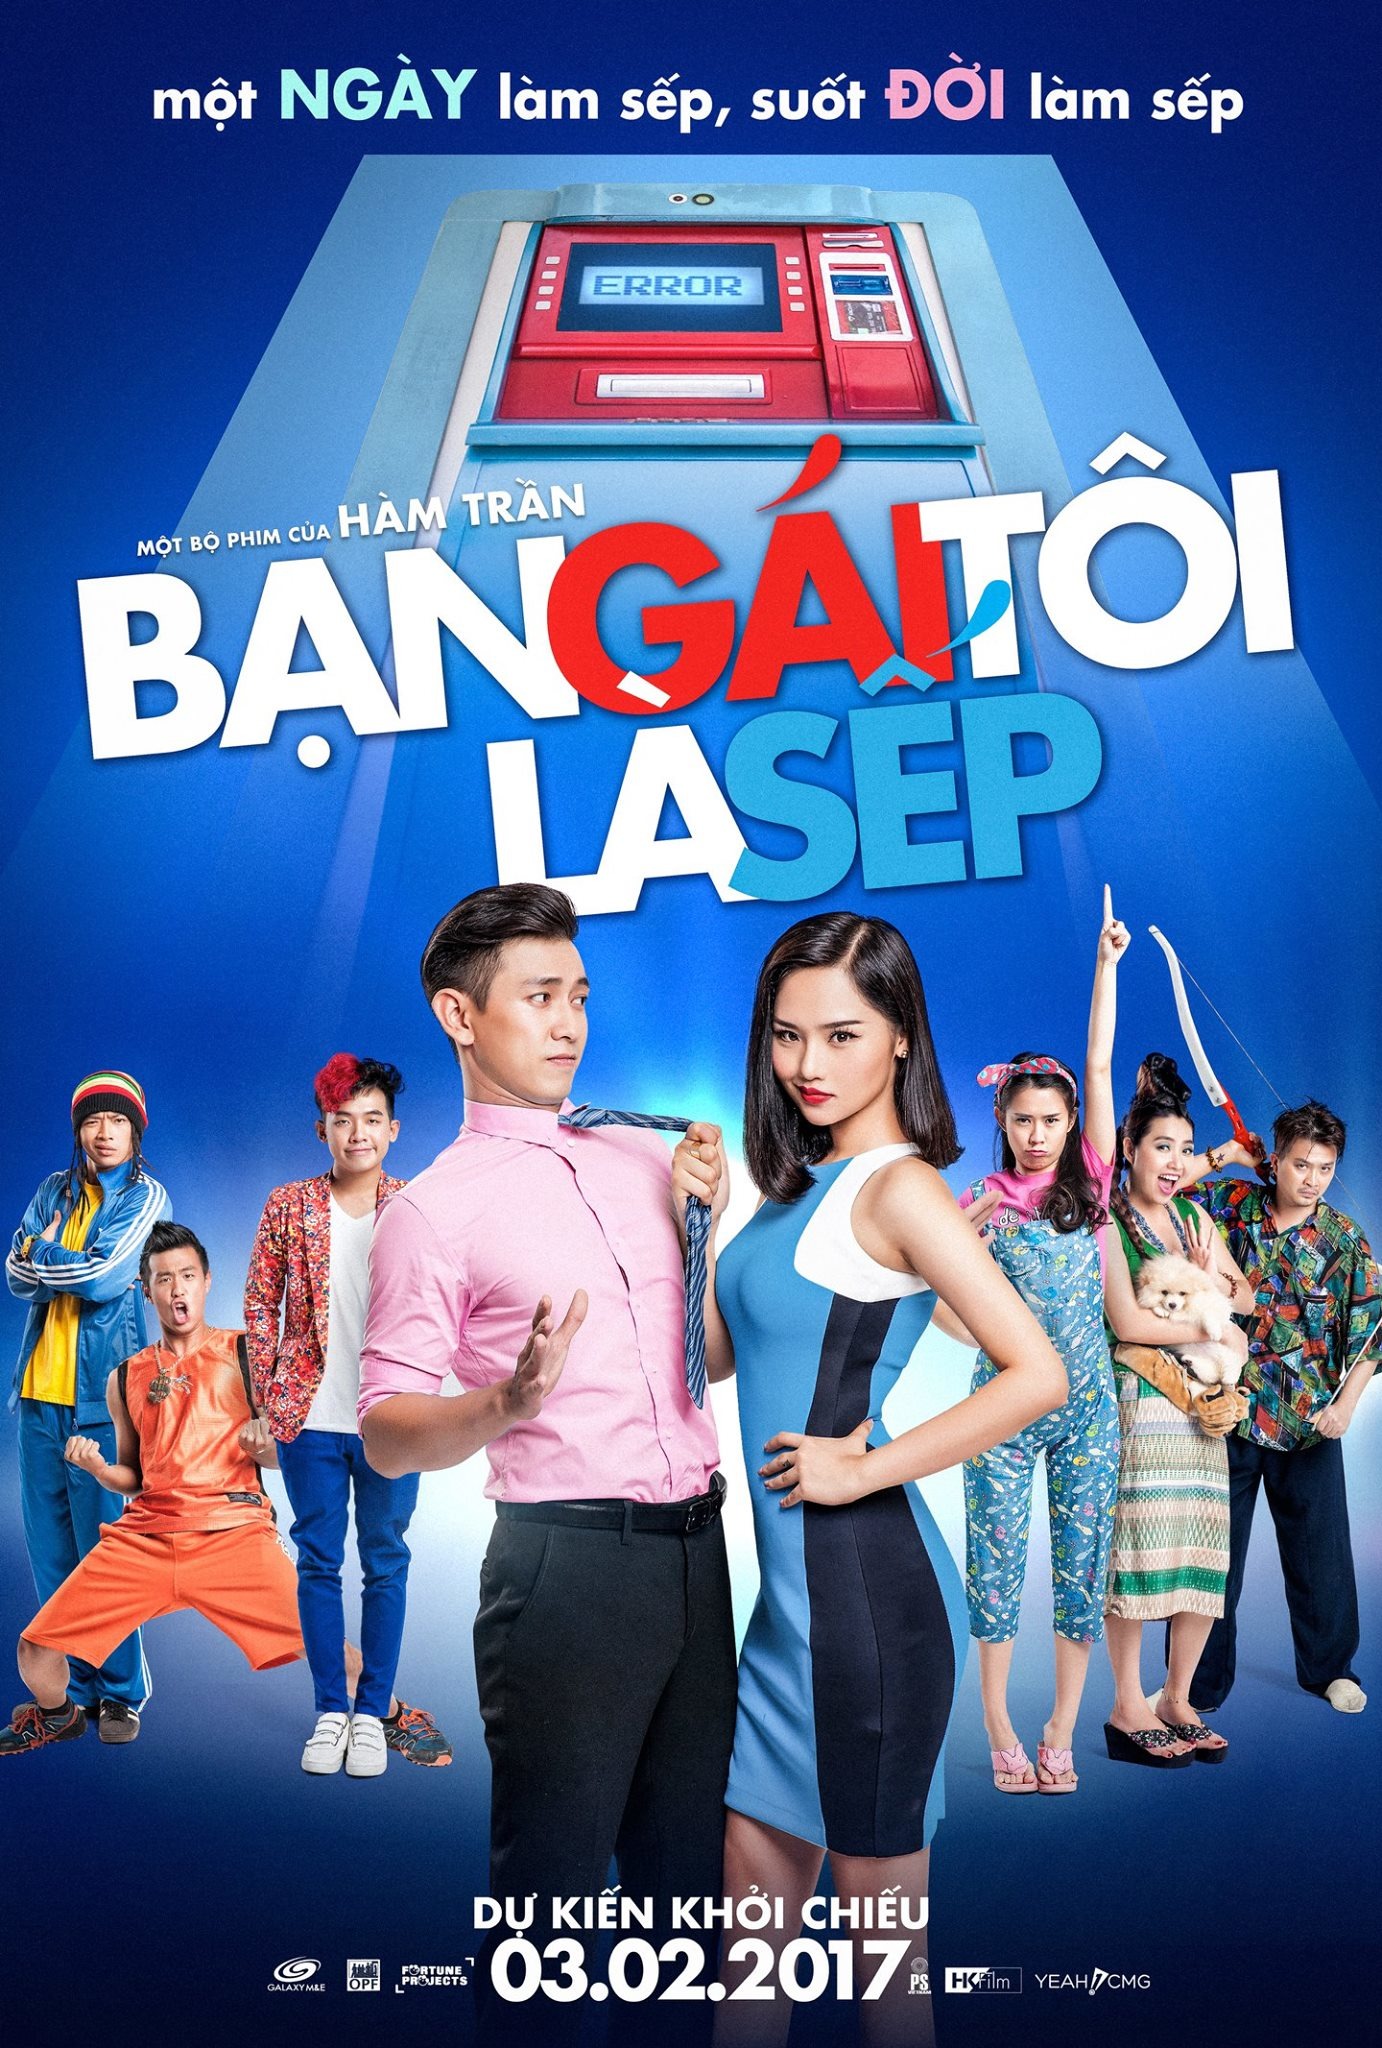 Mega Sized Movie Poster Image for Ban Gai Toi La Sep (#8 of 15)